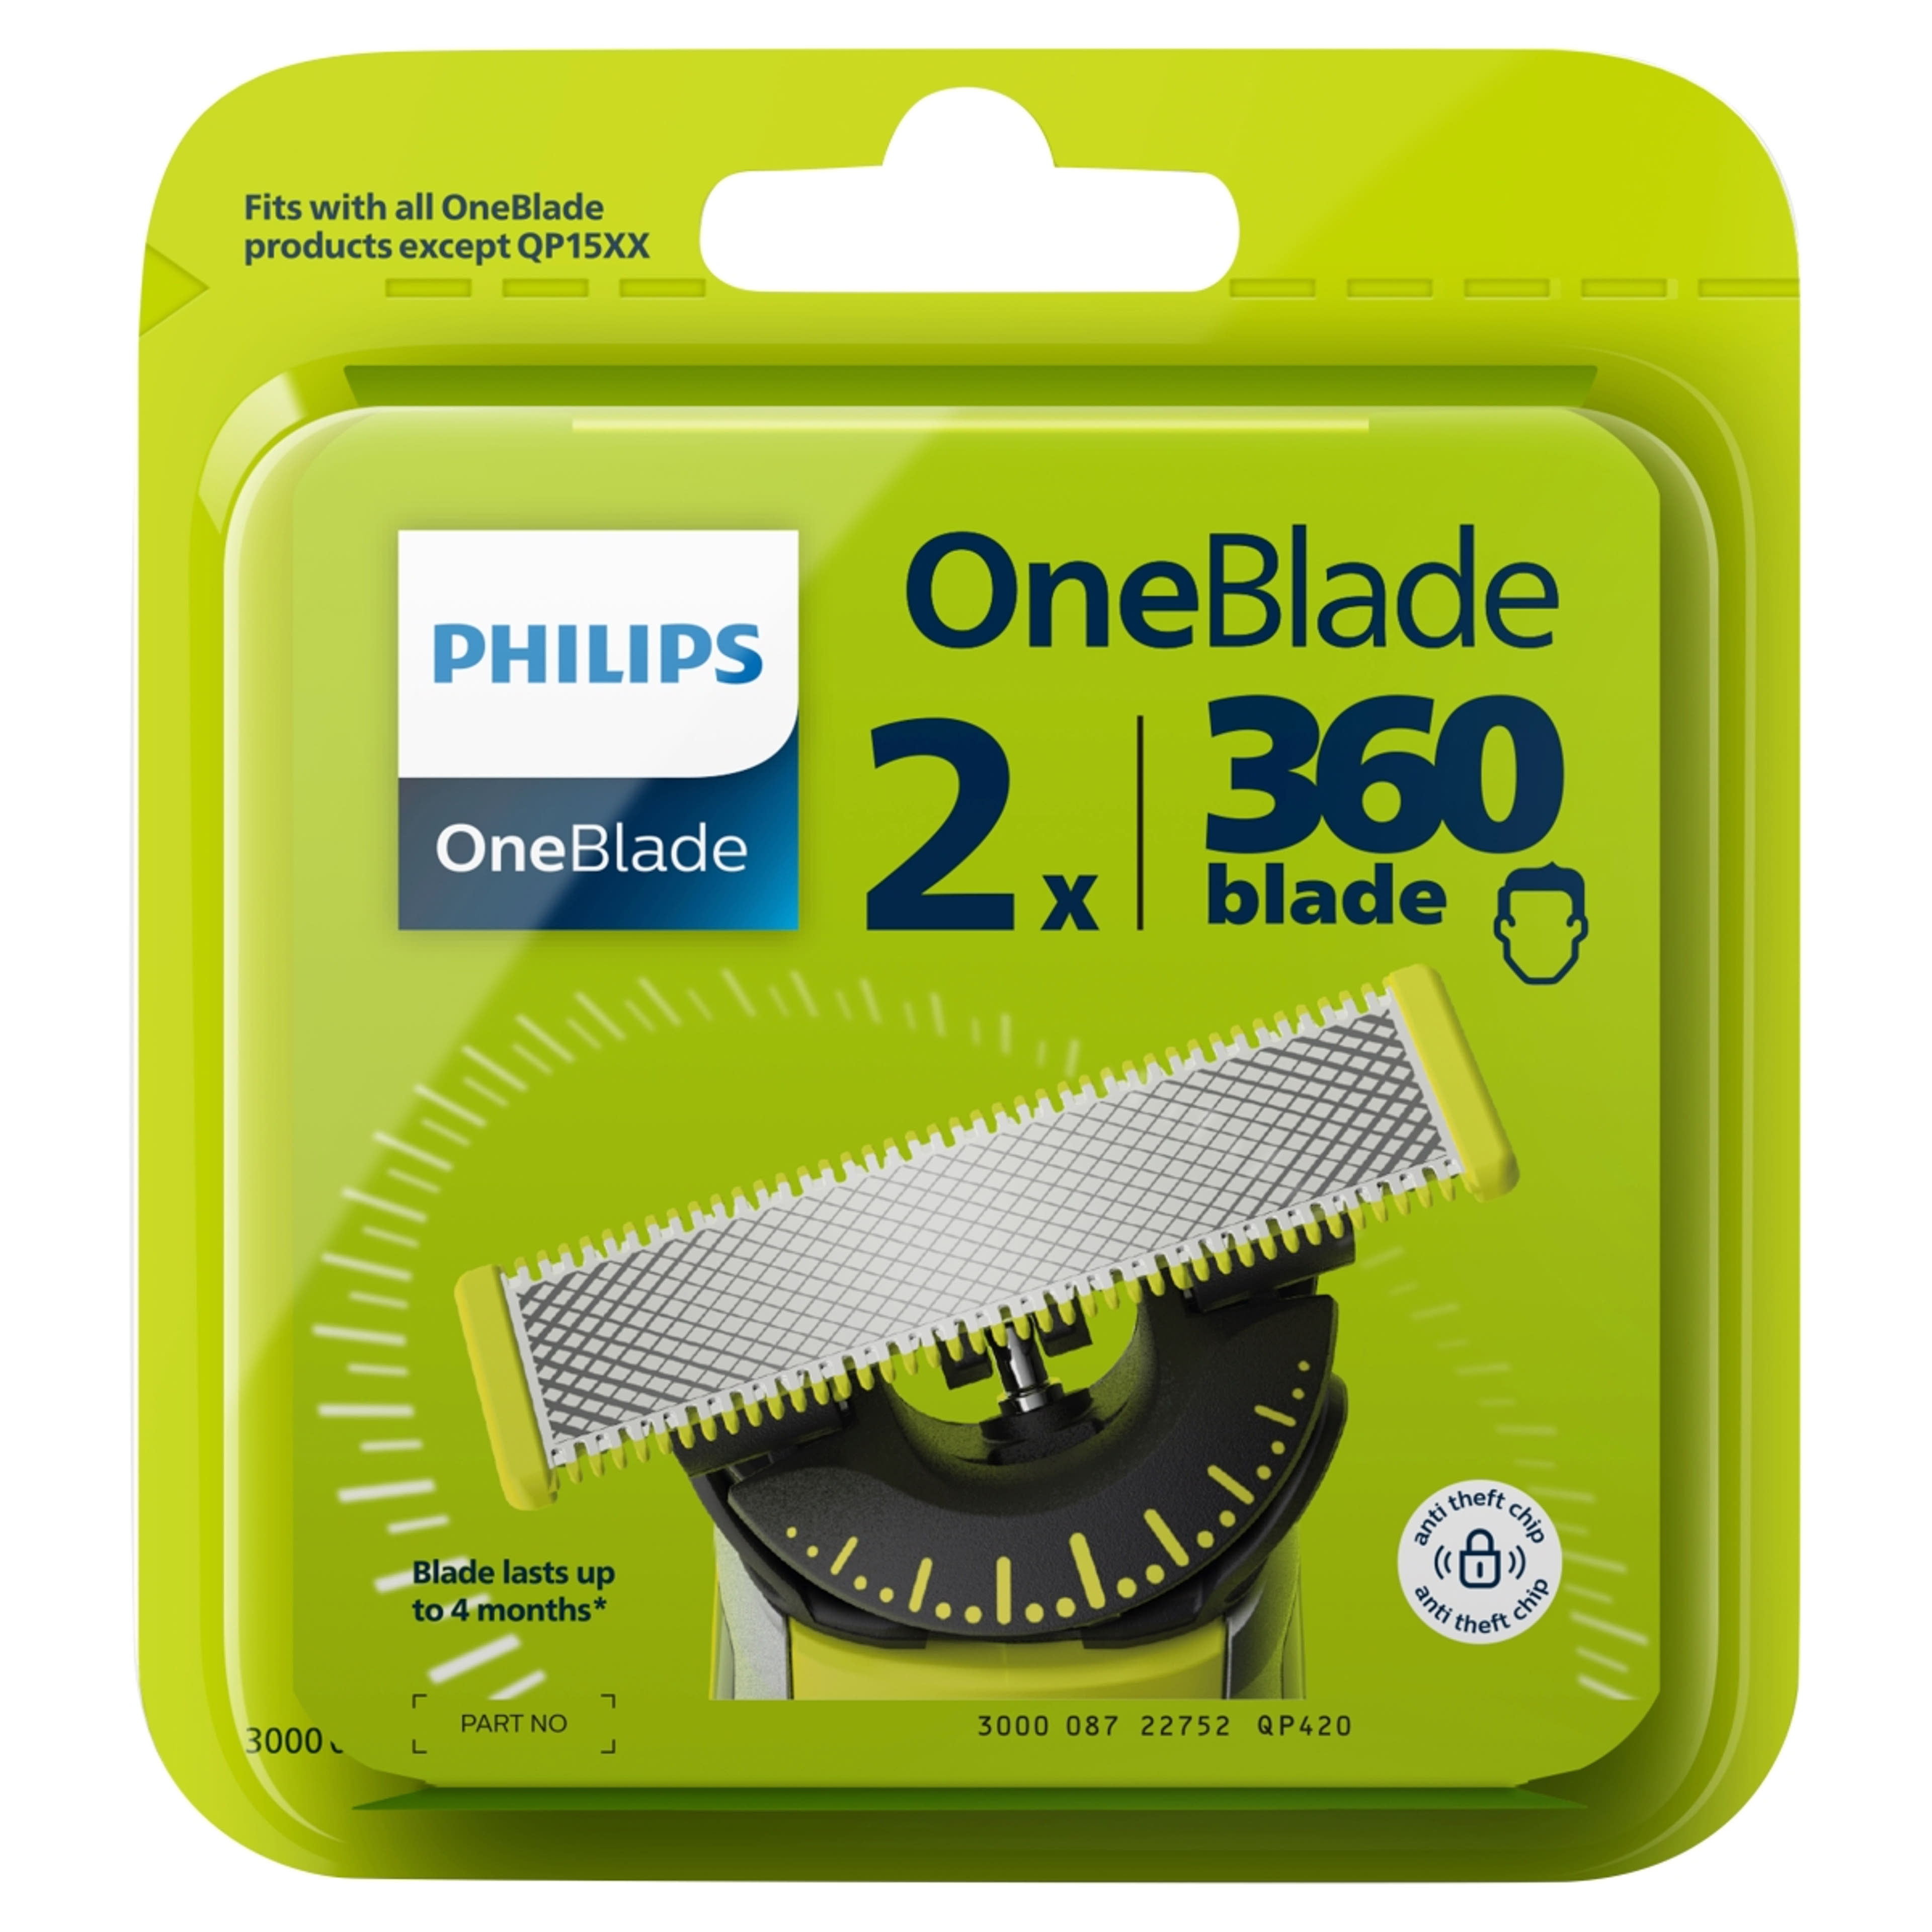 Philips OneBlade QP420/50 360 penge - 2 db